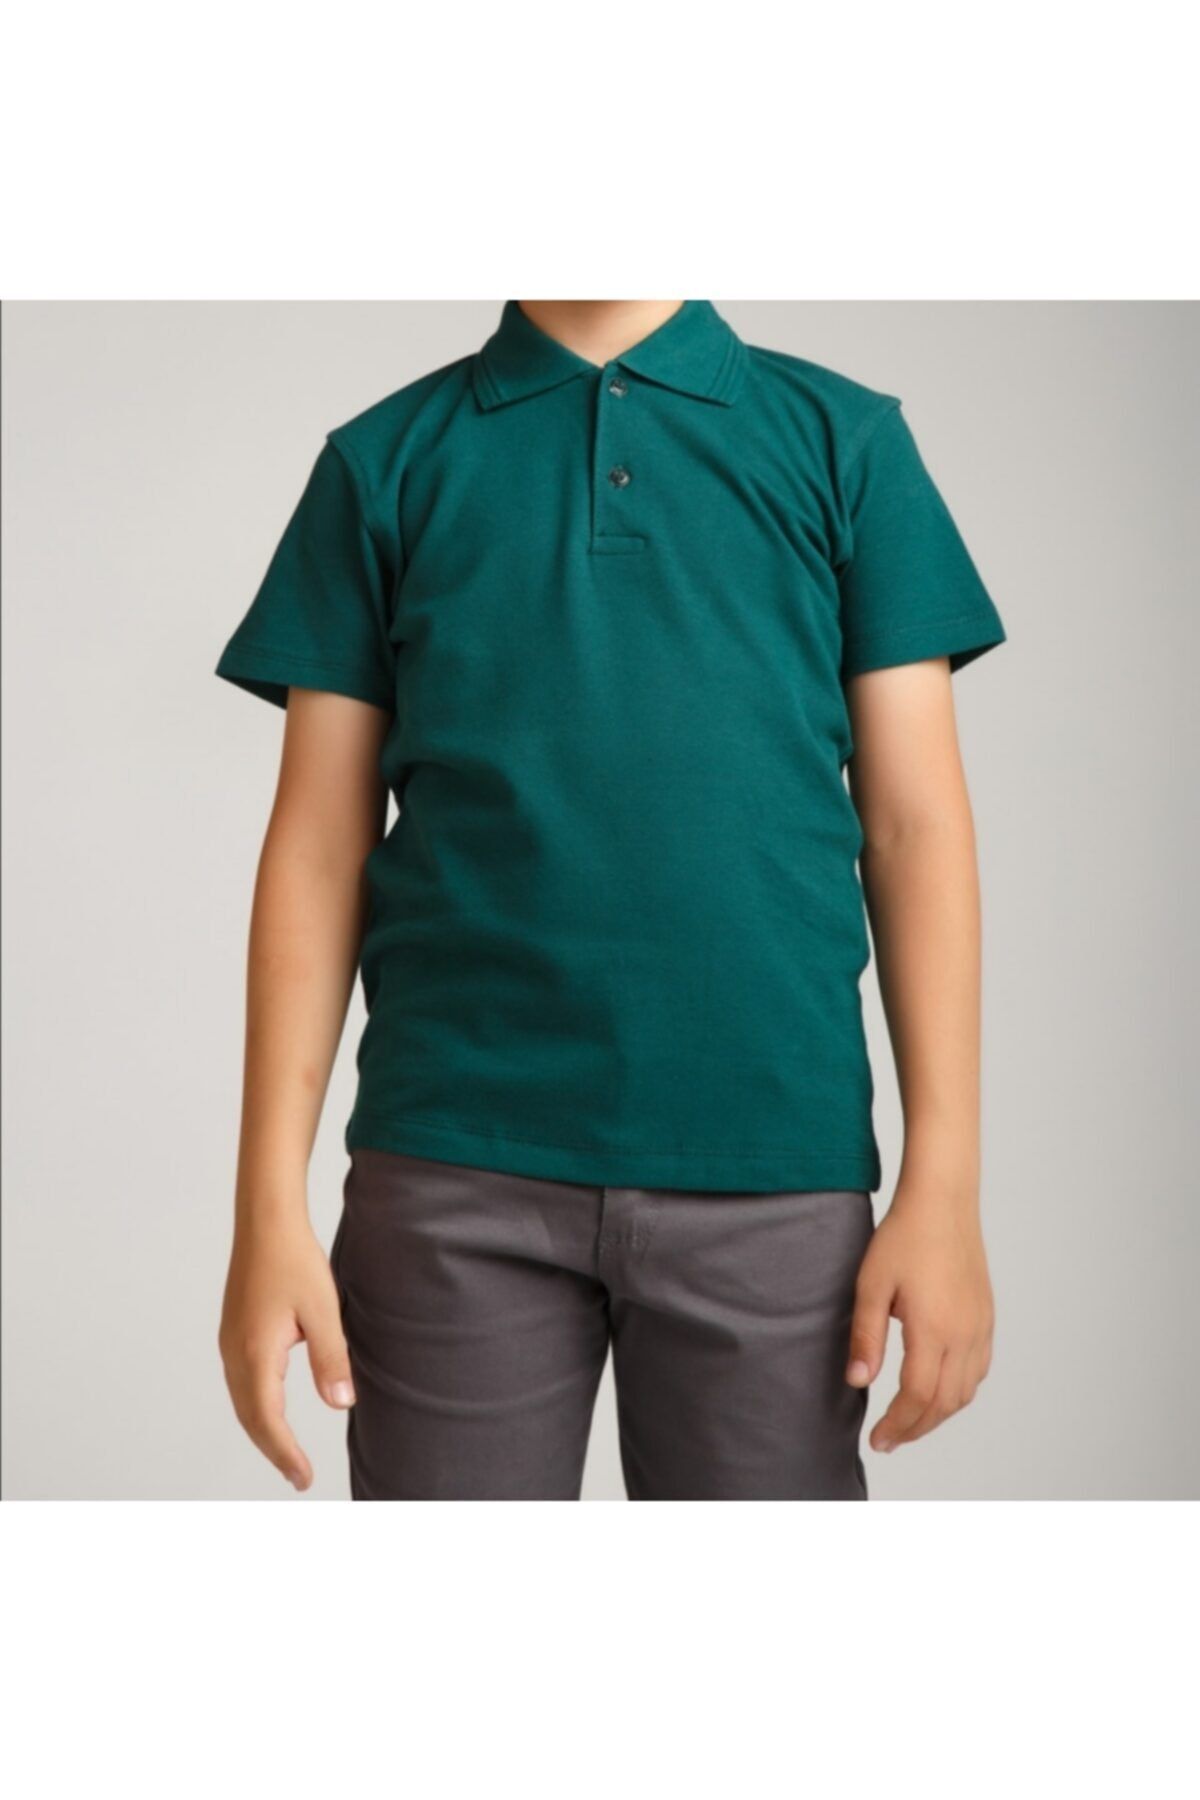 Dragora Koyu Yeşil Kısa Kollu Genç Boy Lise Okul Lakos Polo Yaka T-shirt